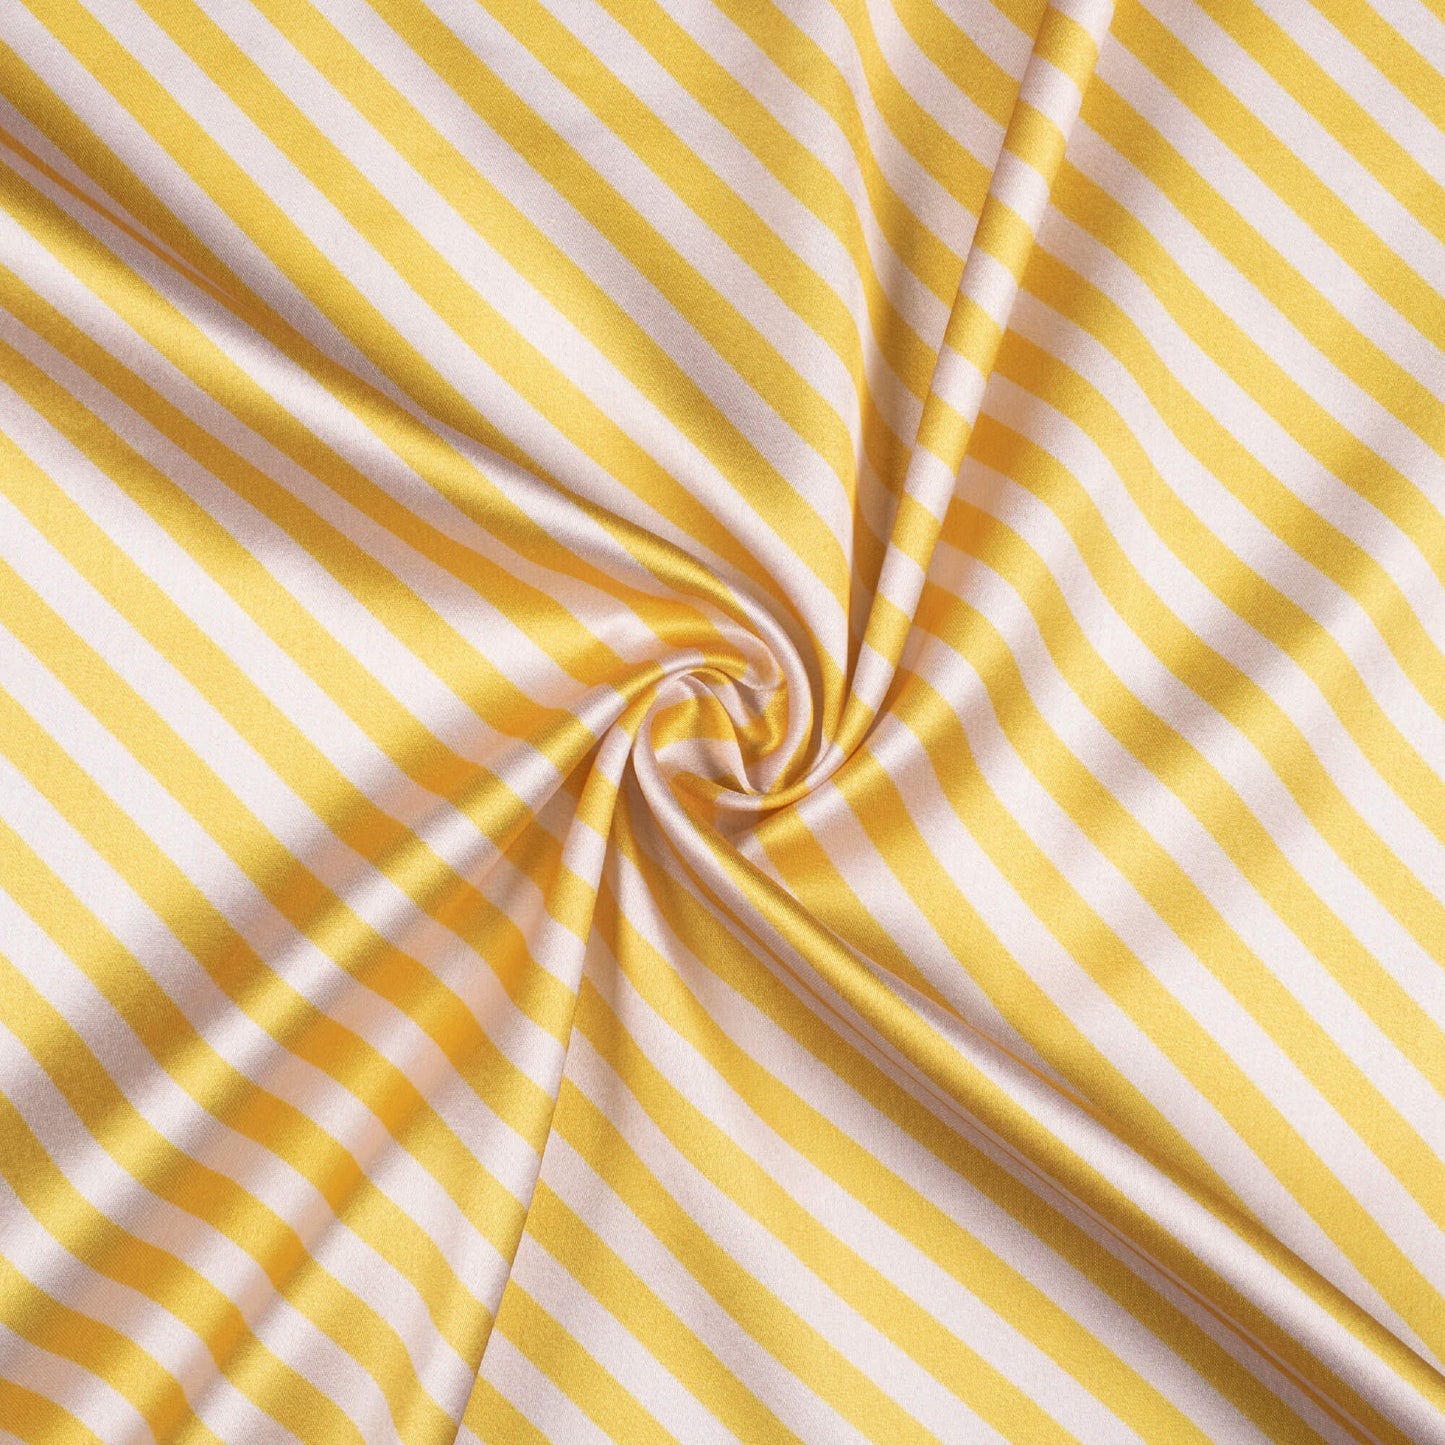 Dijon Yellow And White Stripes Pattern Digital Print Japan Satin Fabric